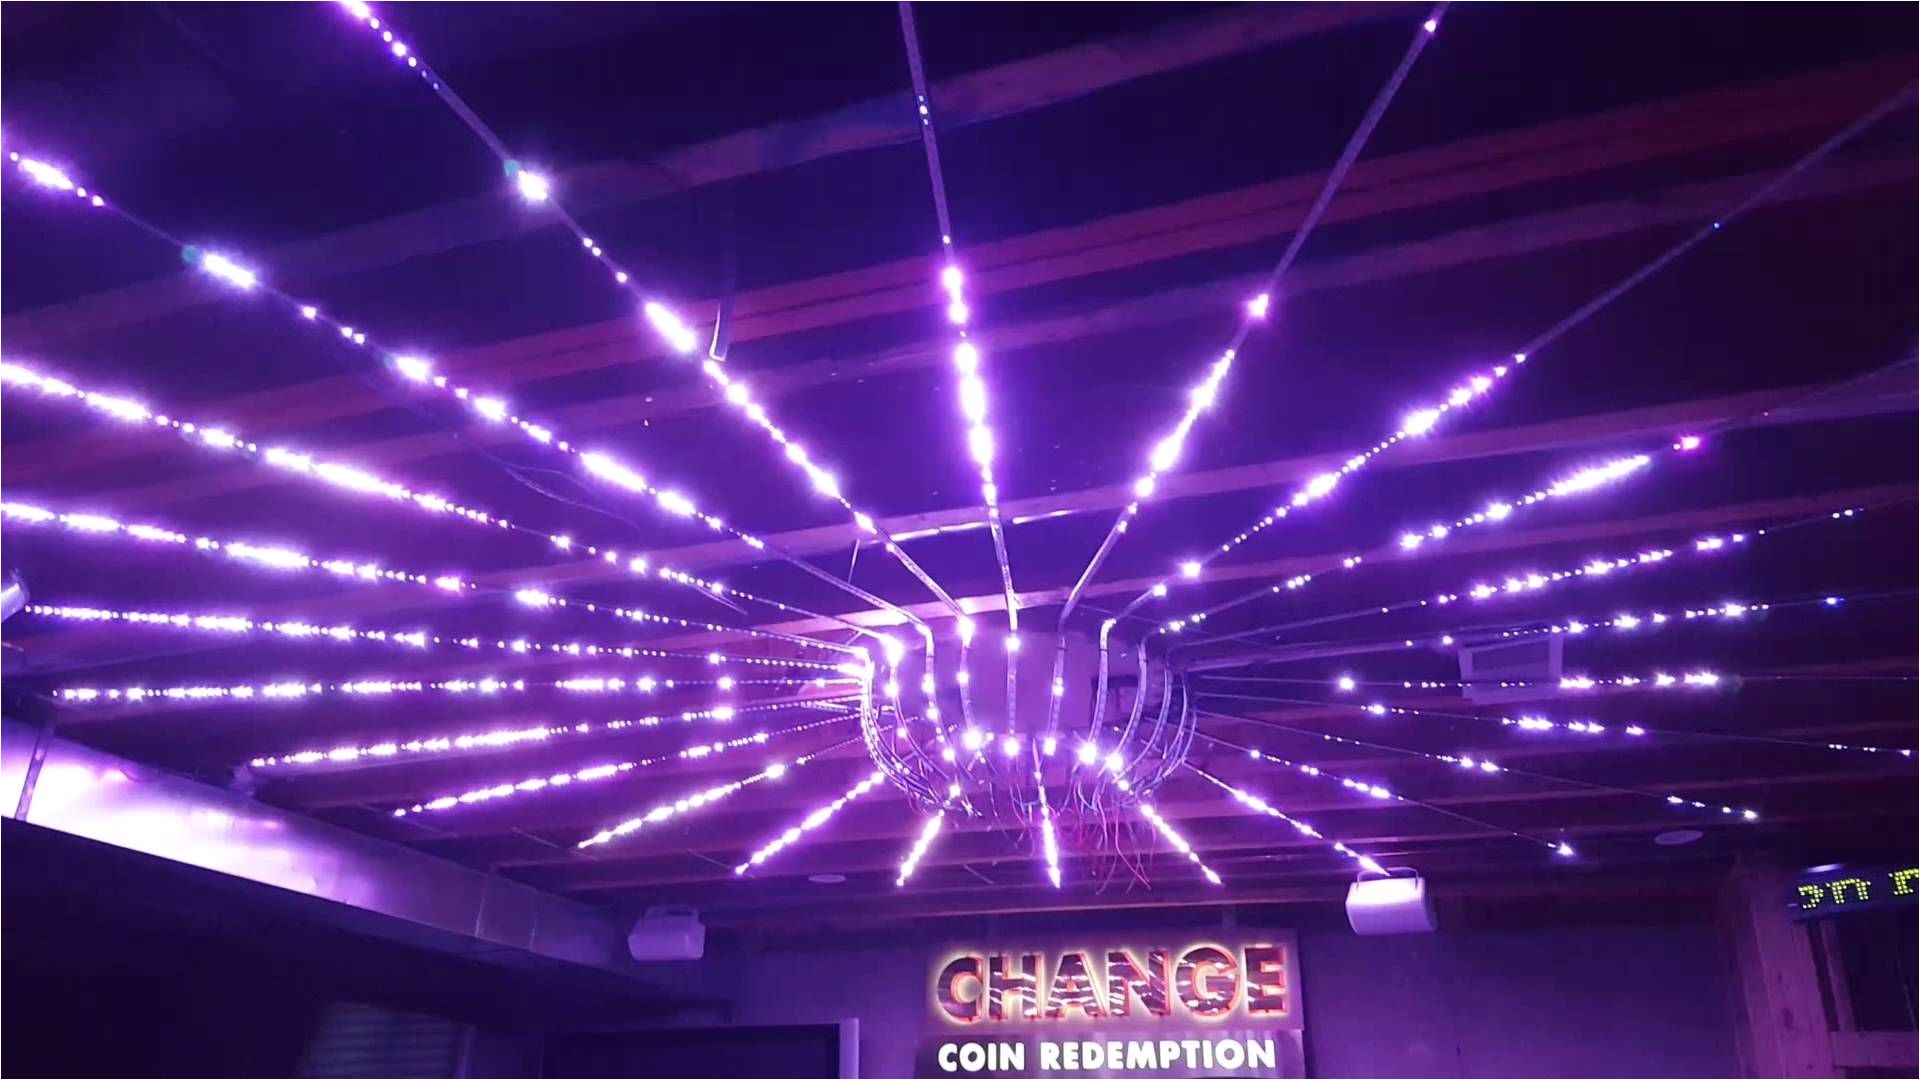 ws2812b led ceiling installation disco lights led ceiling disco lights lighting